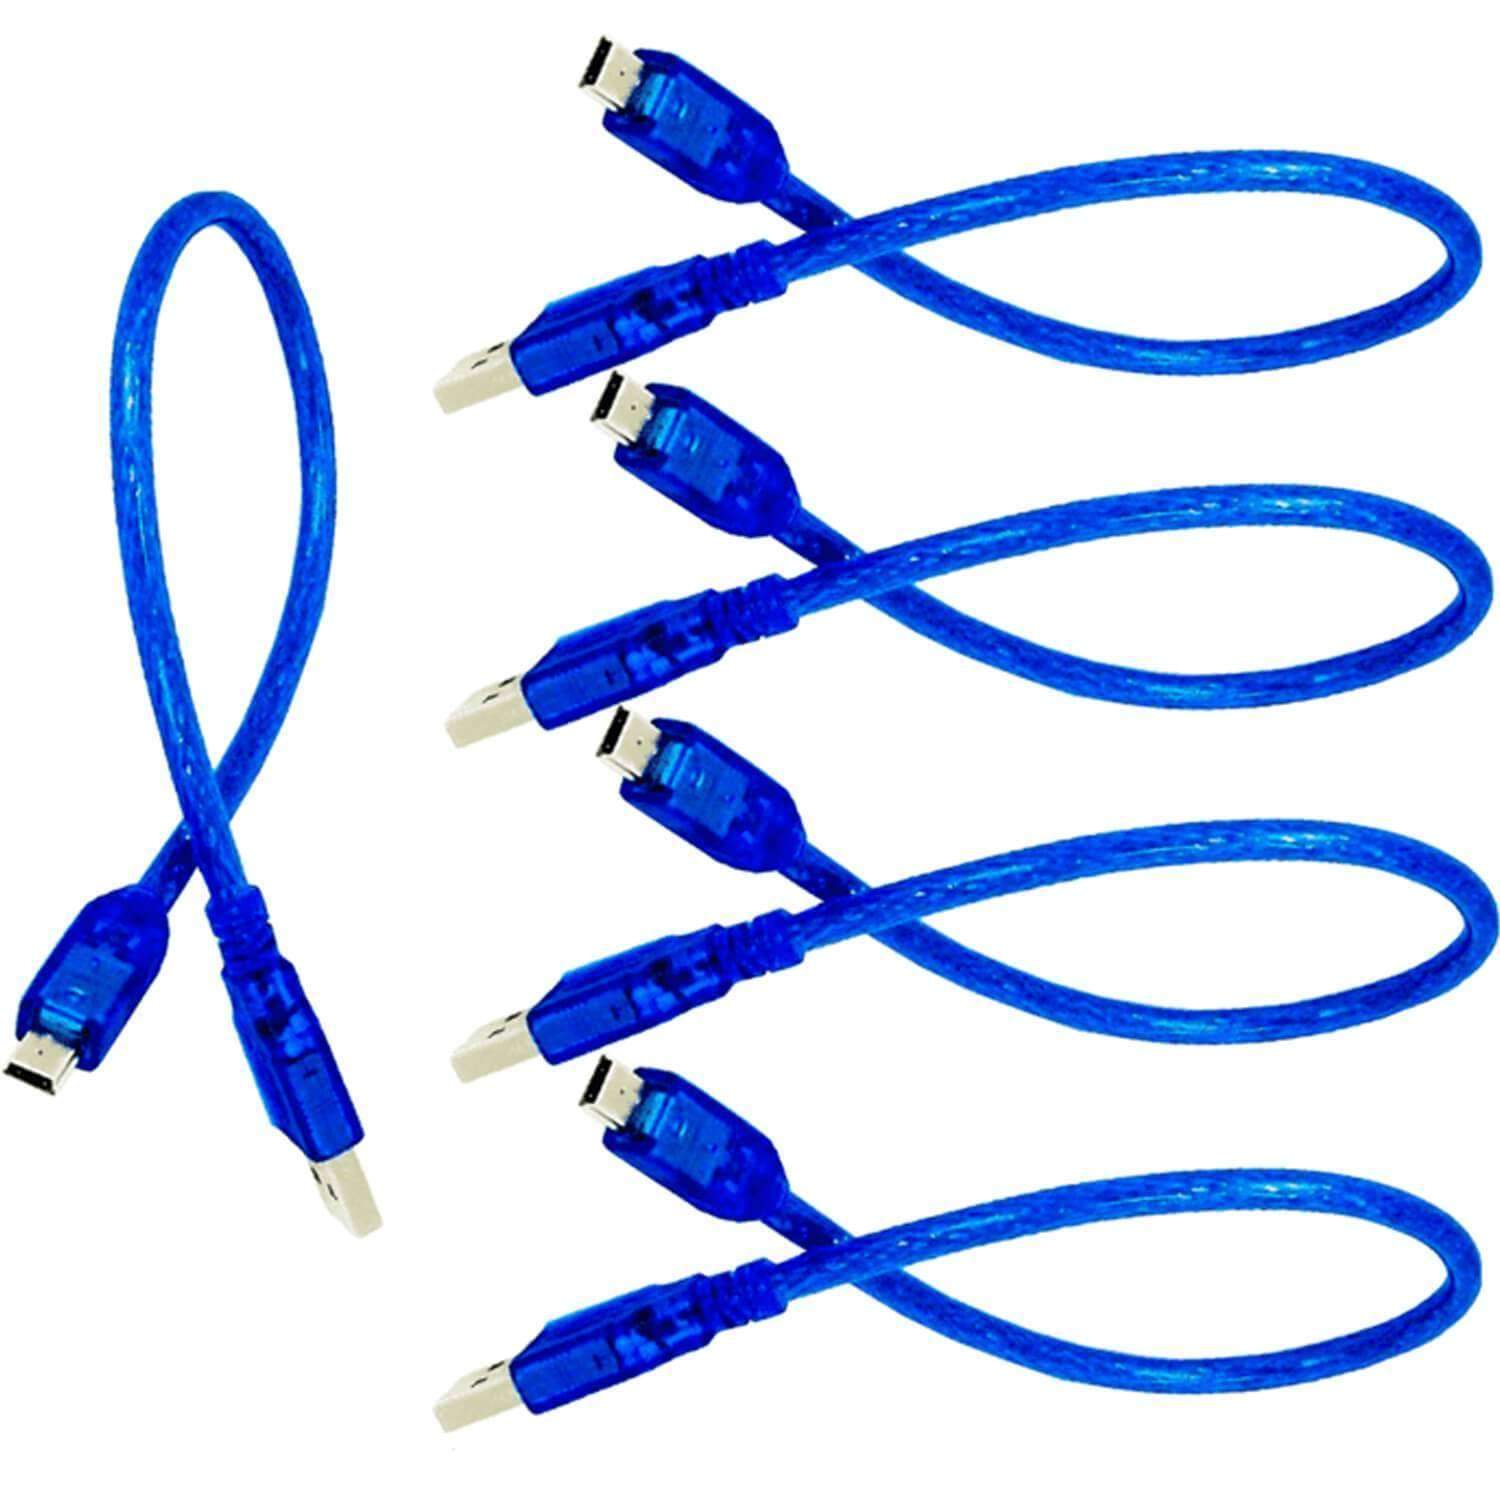 Blaues Mini USB Kabel, 100% kompatibel mit Nano V3 - AZ-Delivery